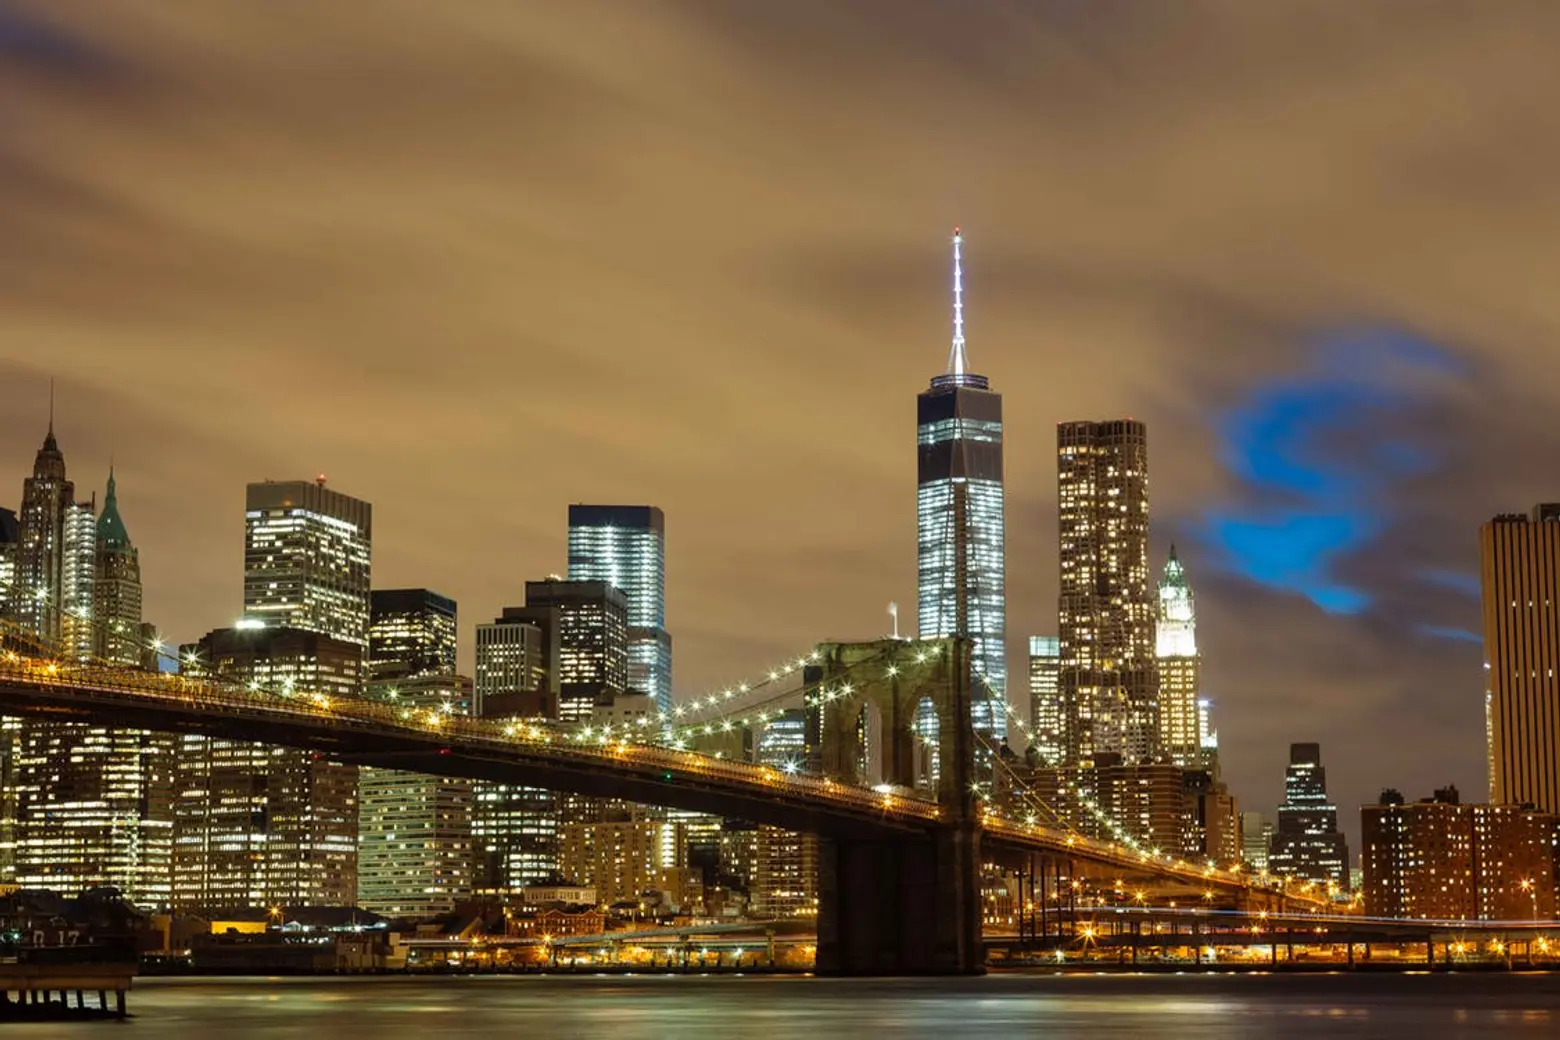 New York ranks #1 in energy efficiency, says new study